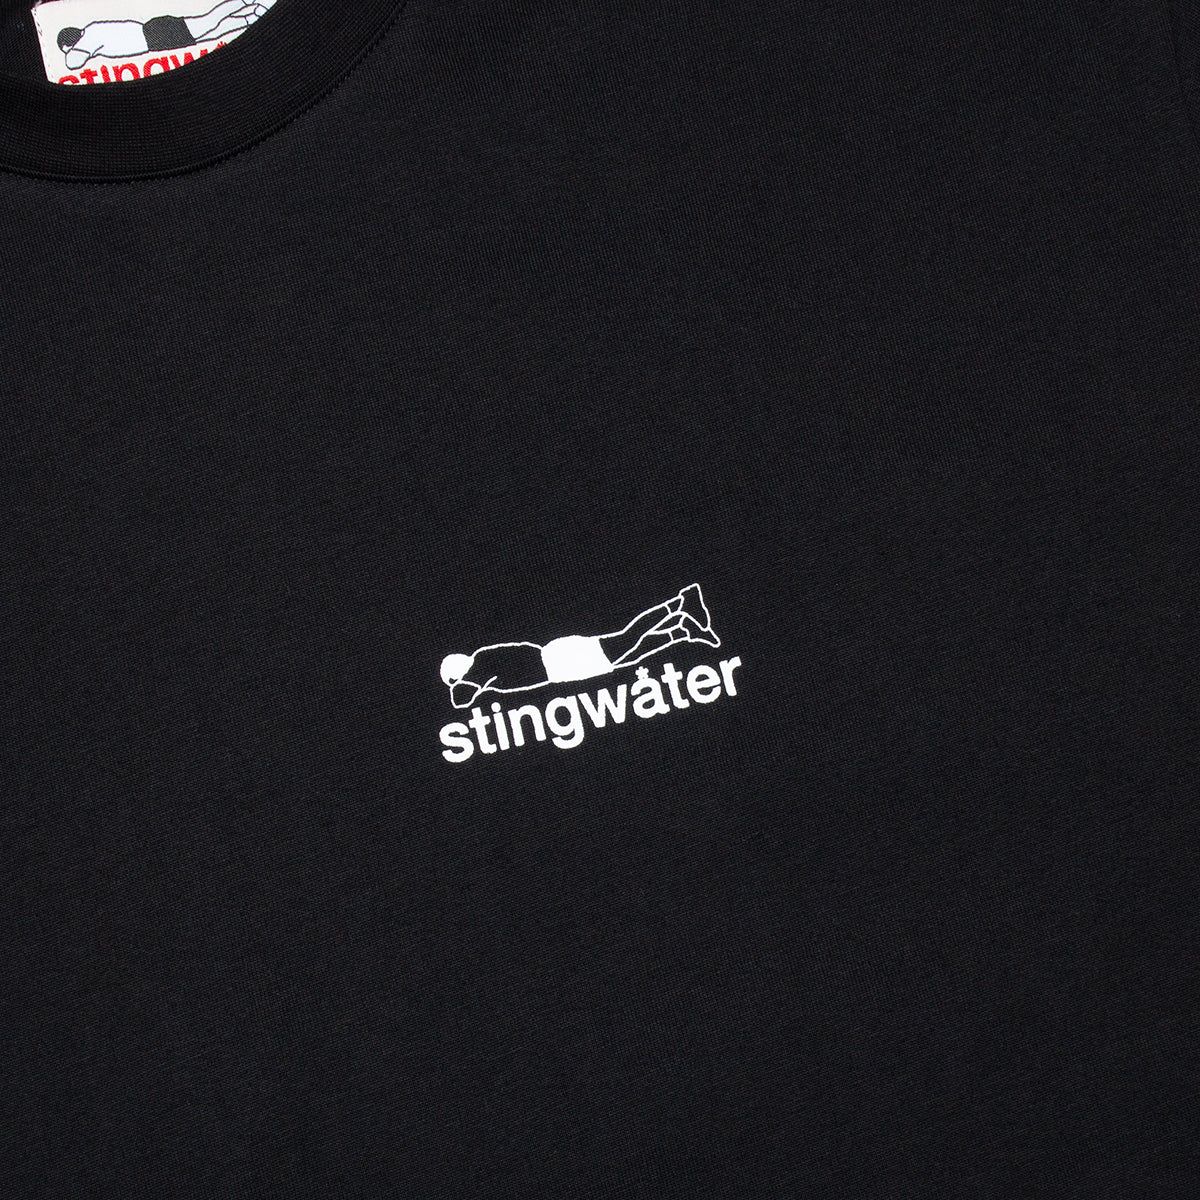 Stingwater Leave Me Alone T-Shirt